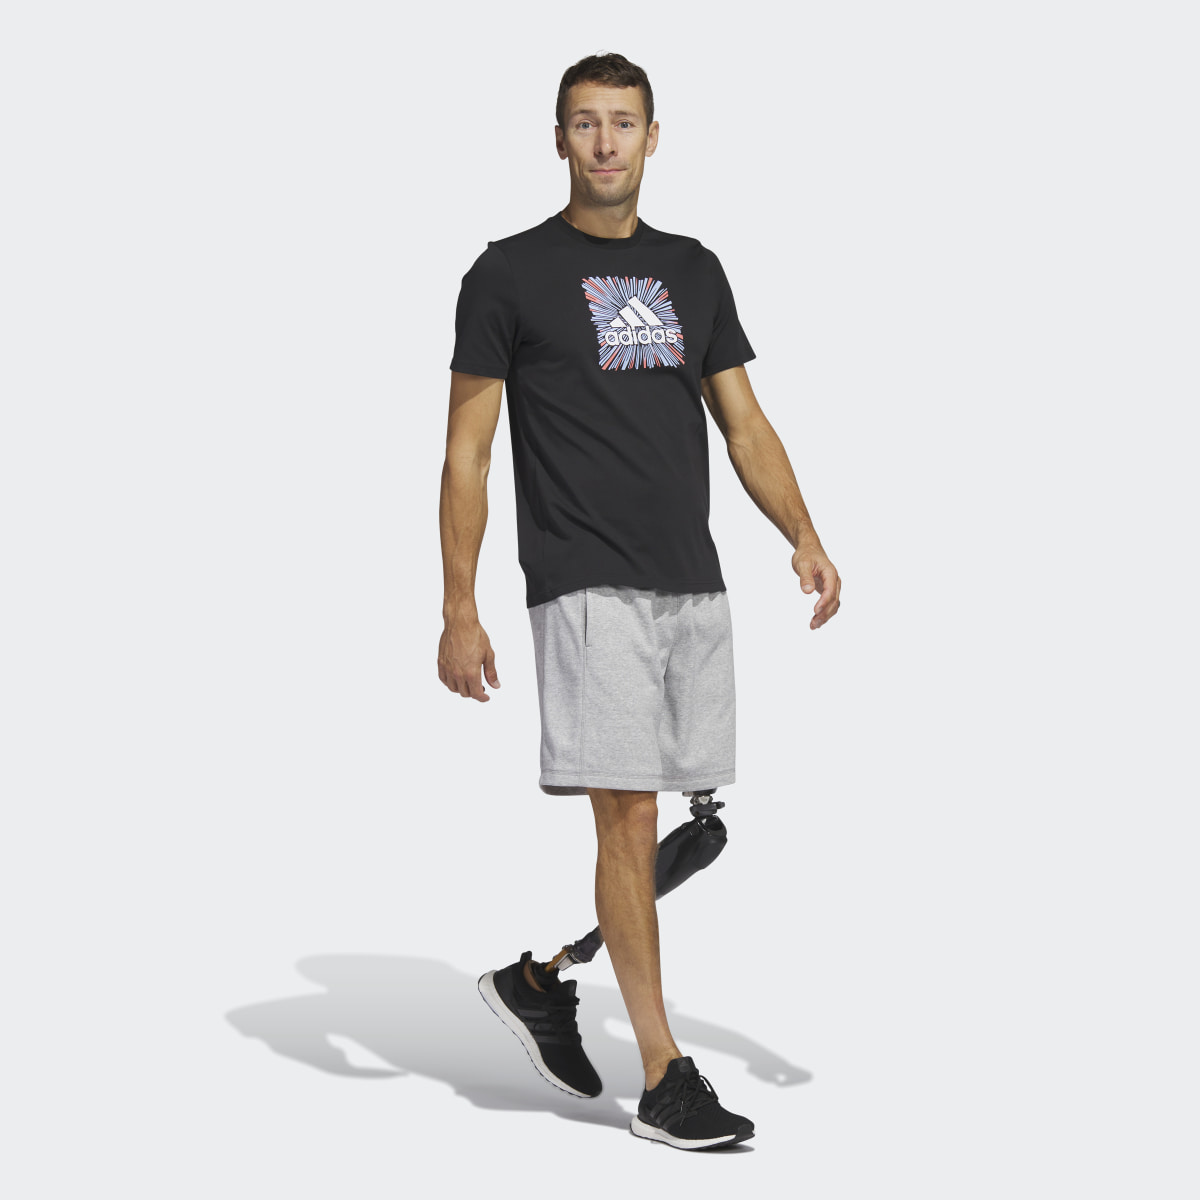 Adidas Sport Optimist Sun Logo Sportswear Graphic Tee (Short Sleeve). 4